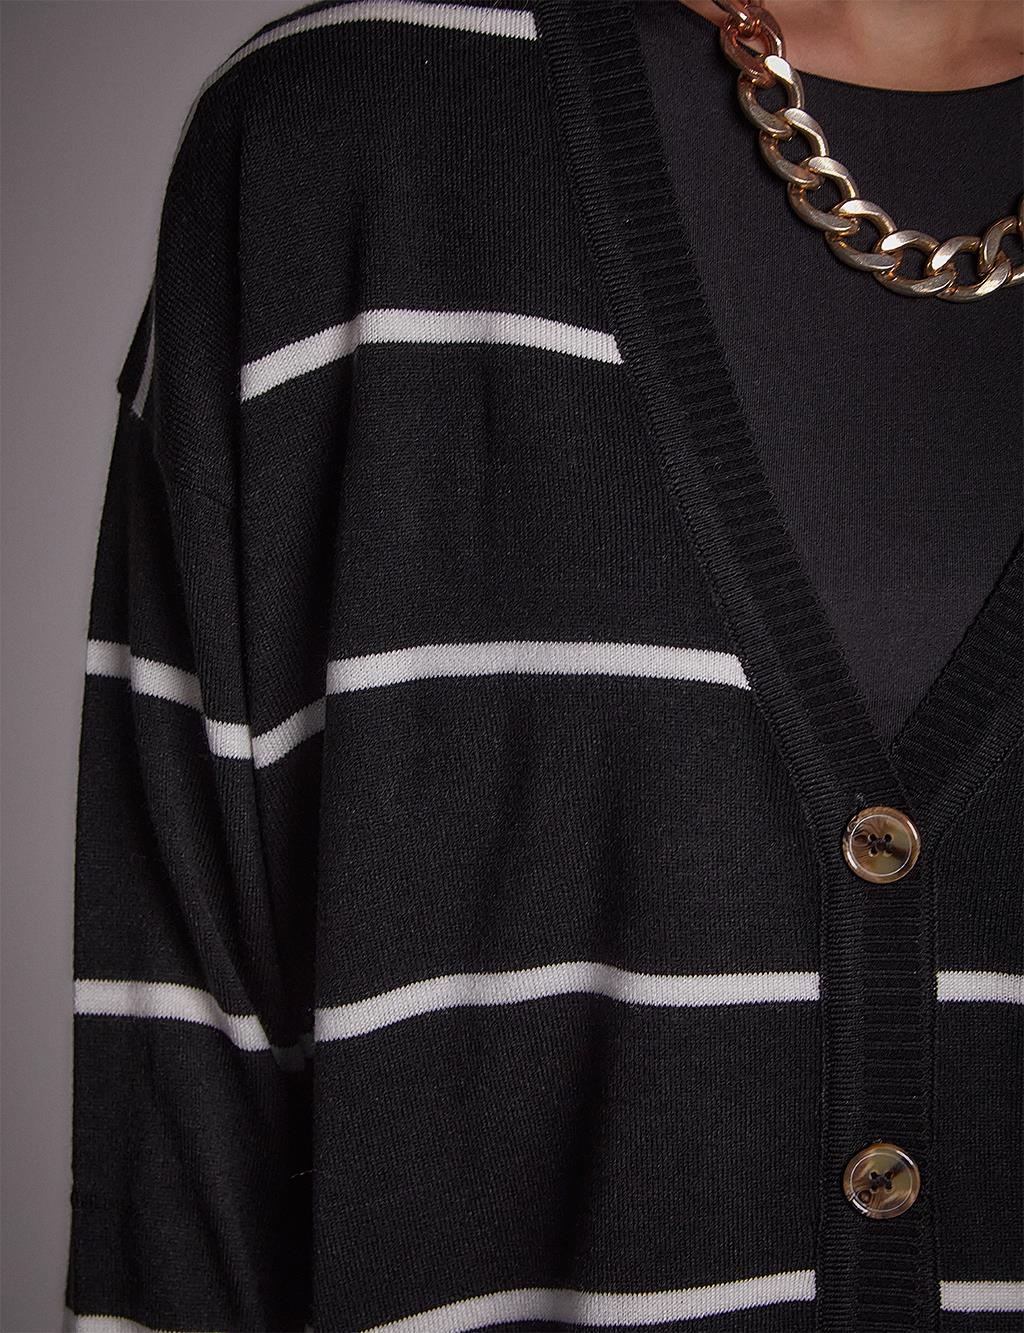 Striped Knitwear Cardigan Black-White